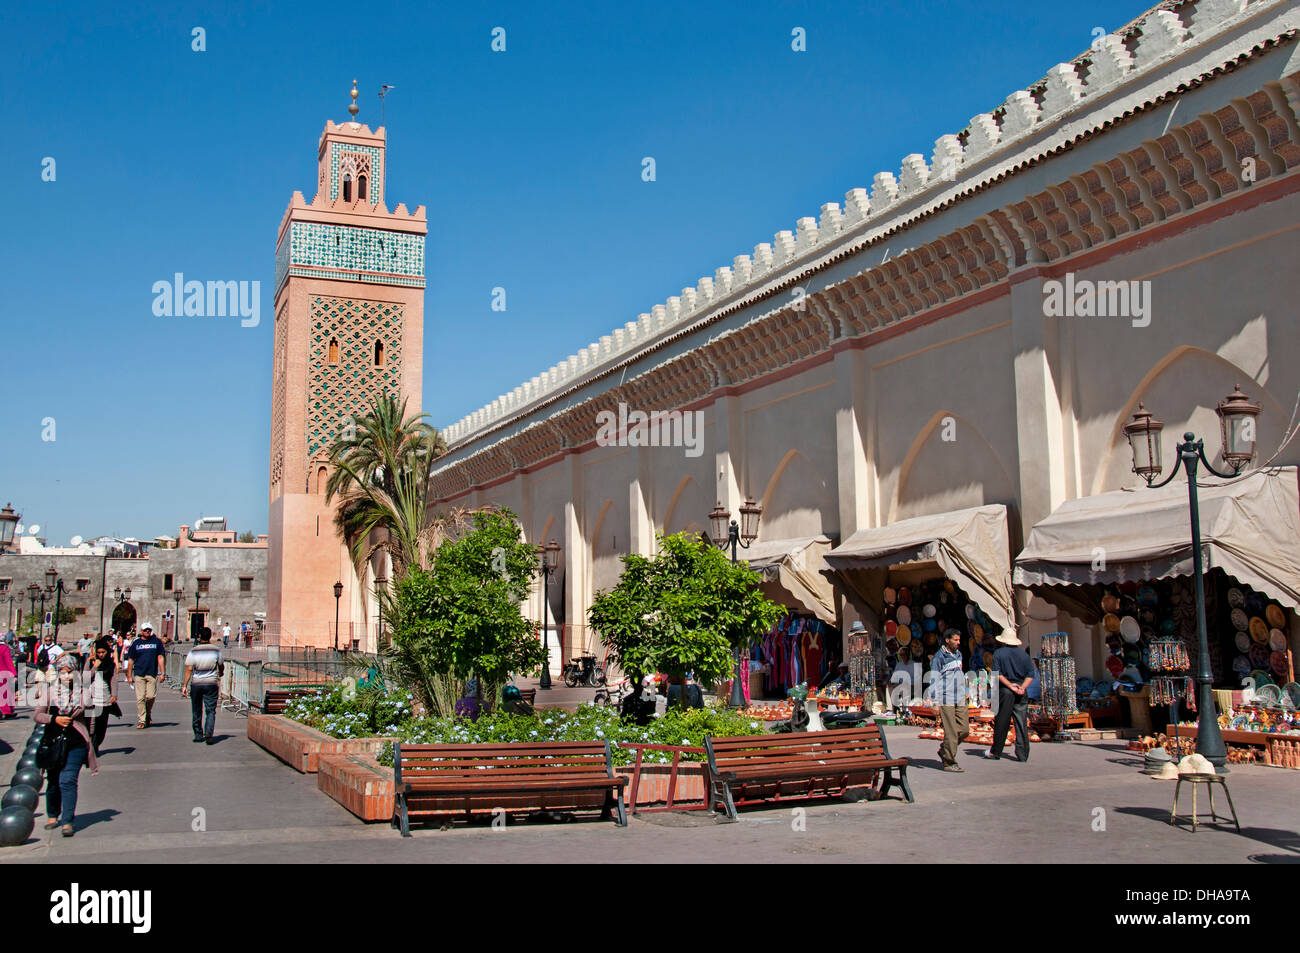 Moschea de la Kasbah marrakech marocco islam musulmani Foto Stock